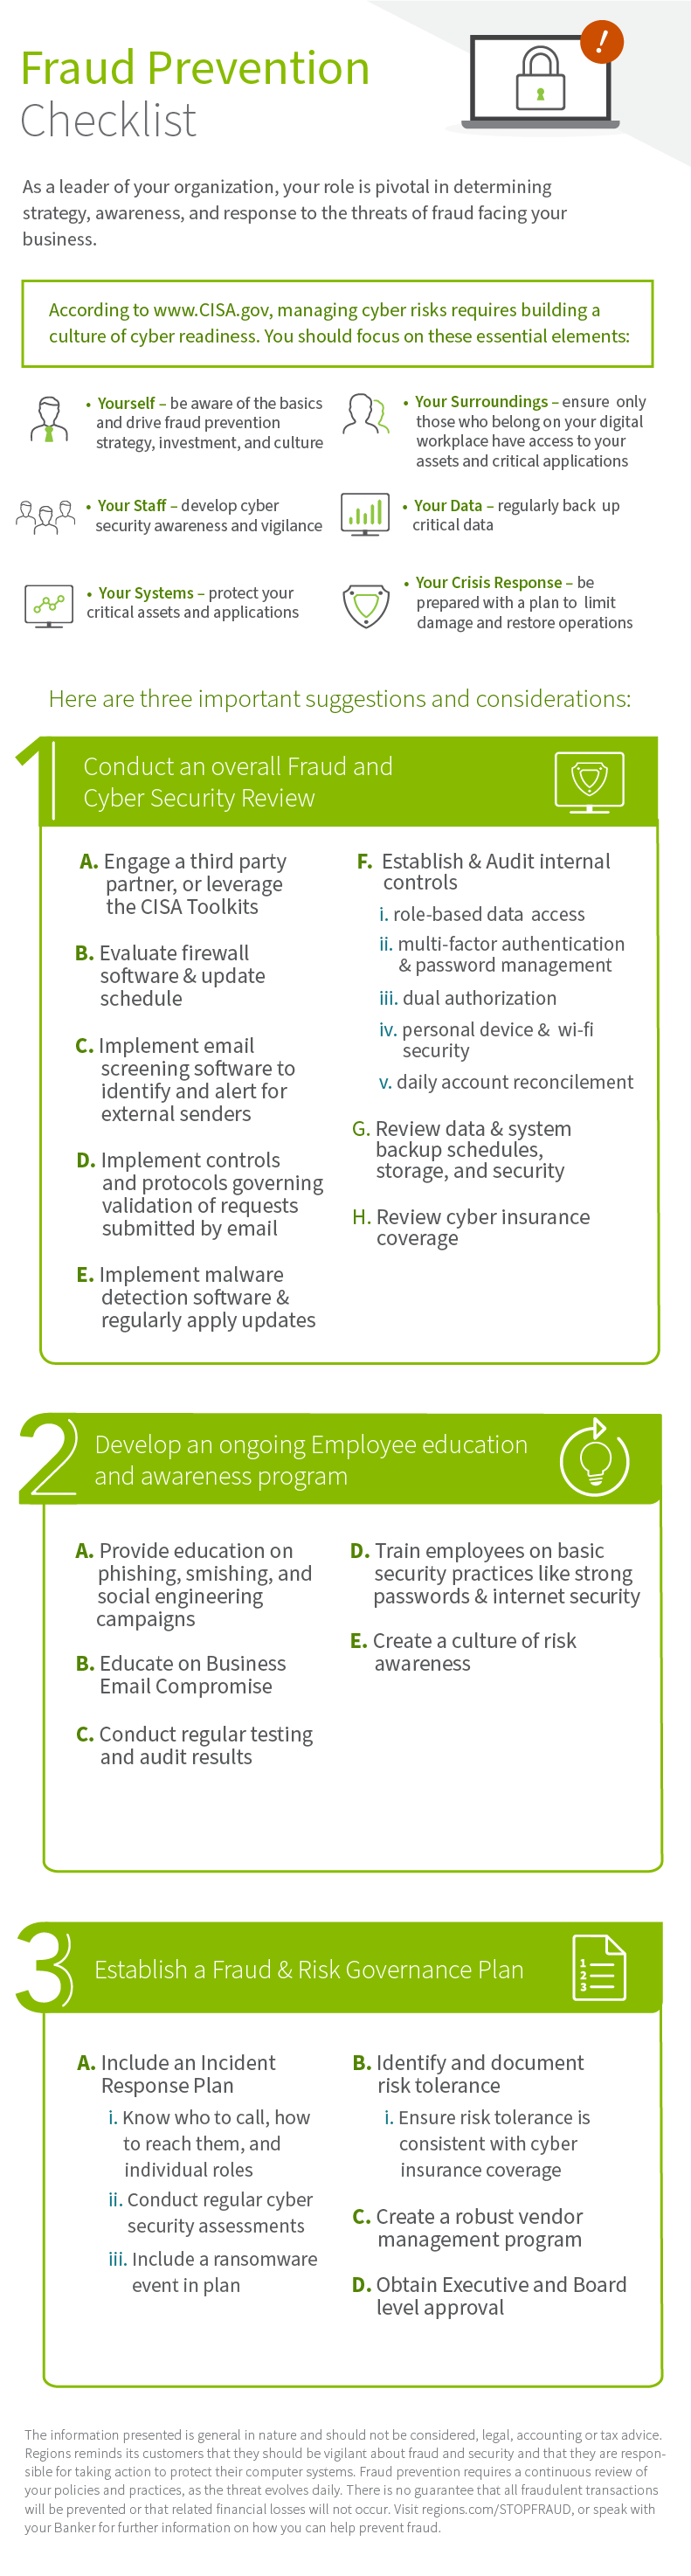 fraud prevention checklist infographic